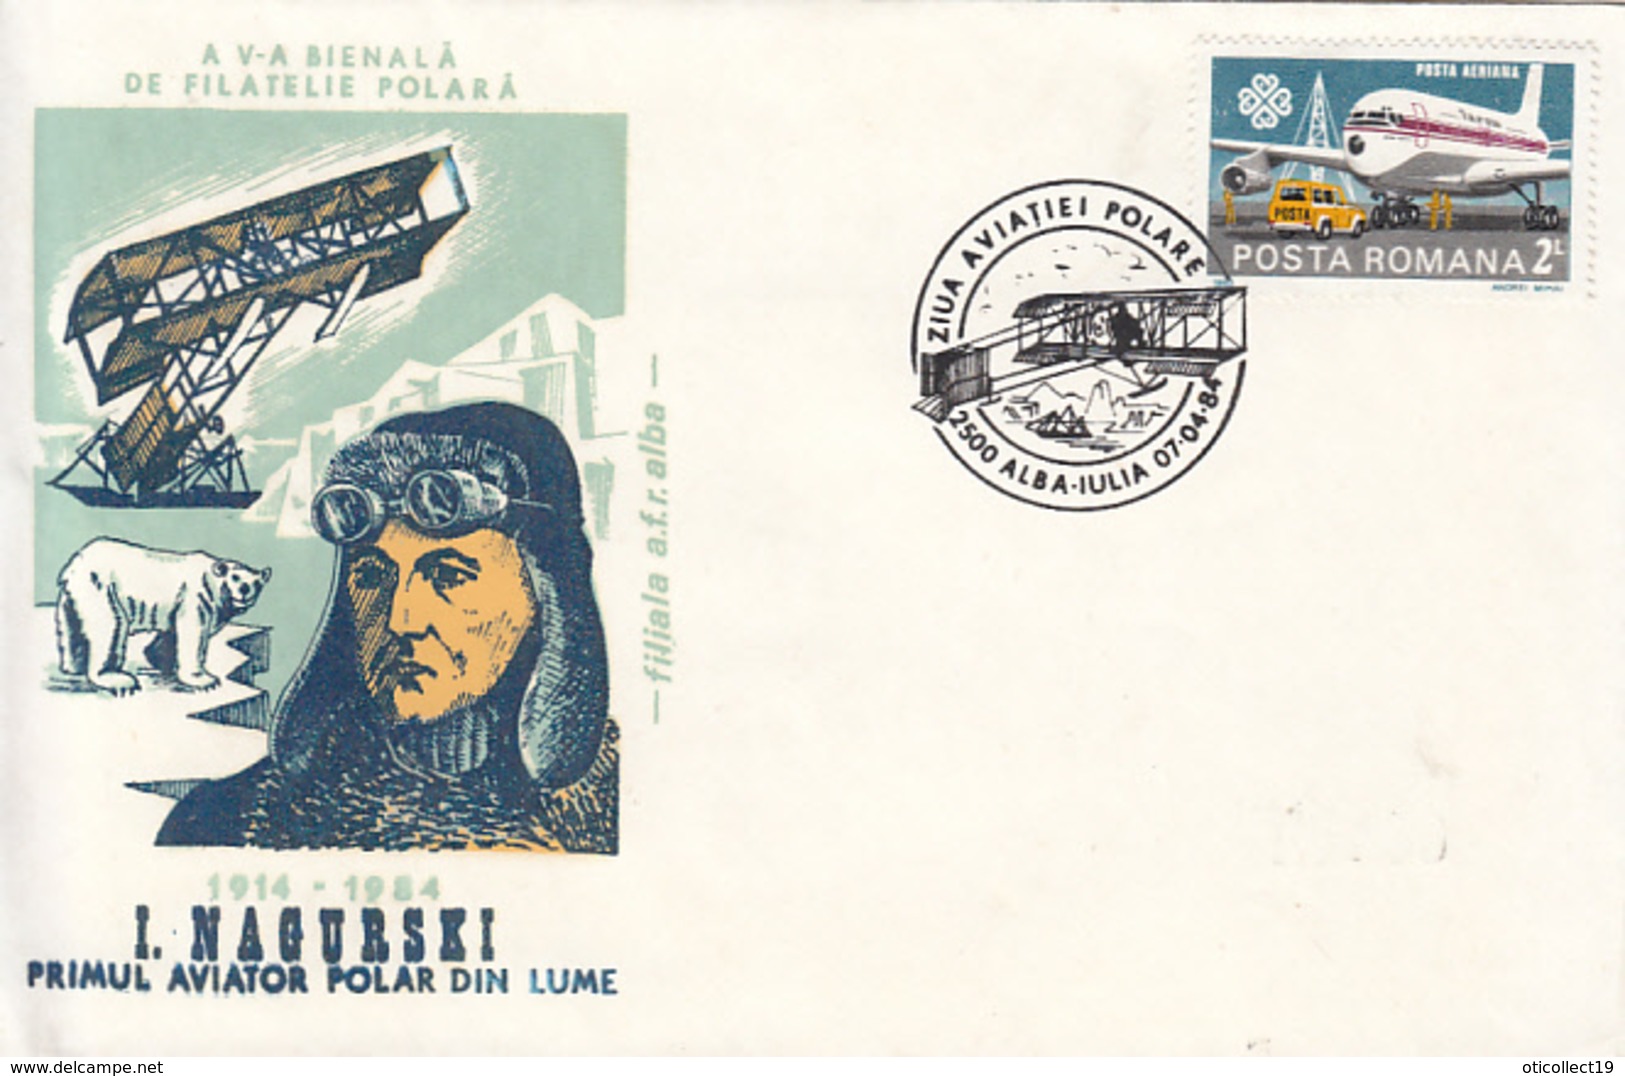 POLAR FLIGHTS, I. NAGURSKI, FIRST POLAR FLIGHT, PILOT, POLAR BEAR, SPECIAL COVER, 1984, ROMANIA - Poolvluchten